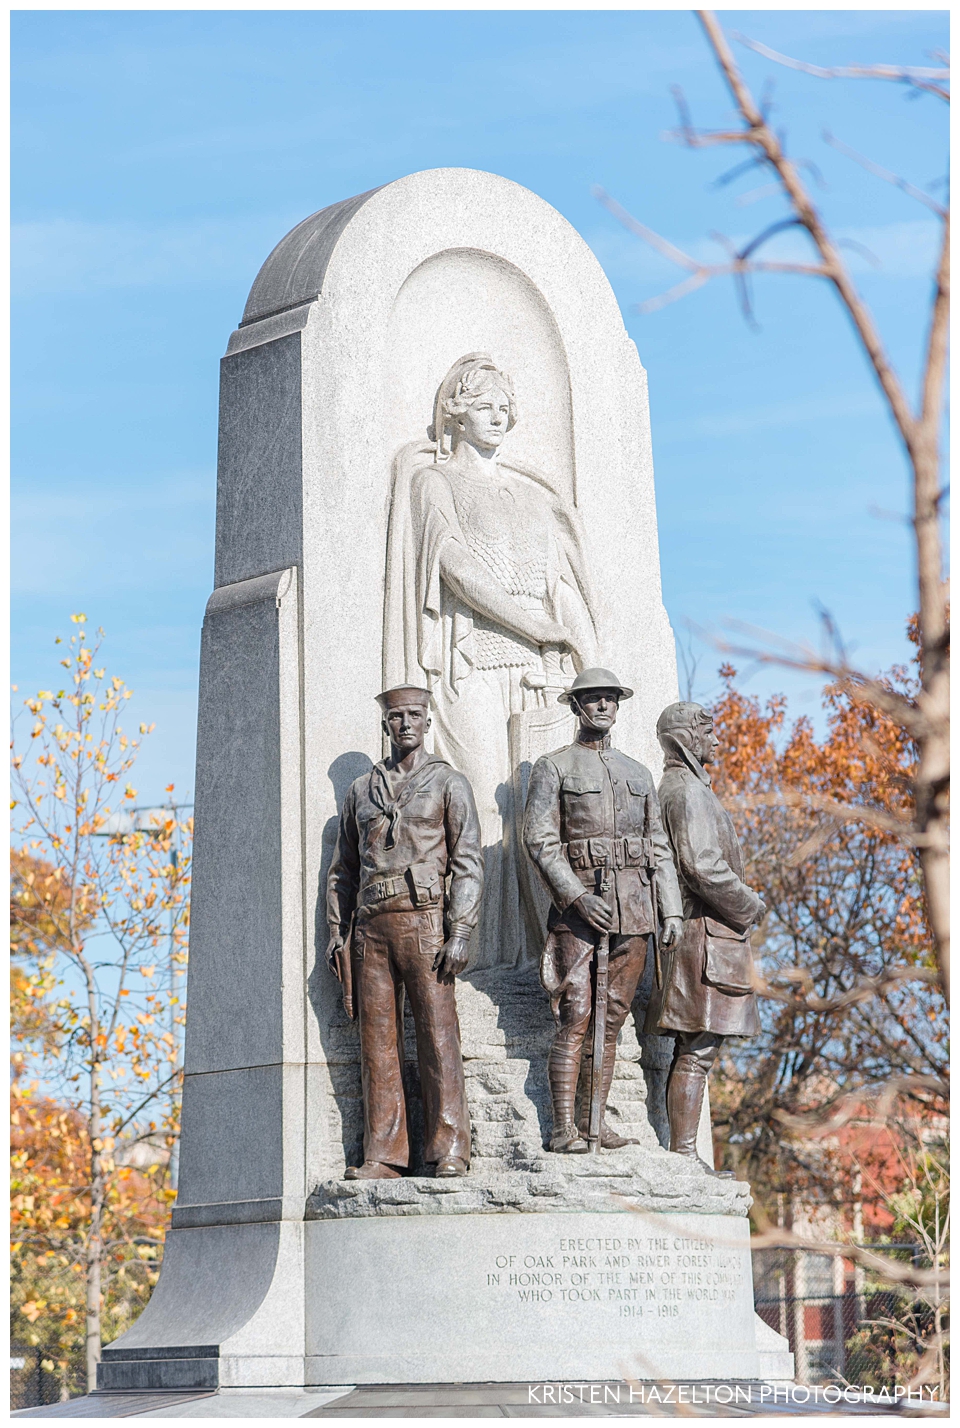 World War I monument in Scoville Park